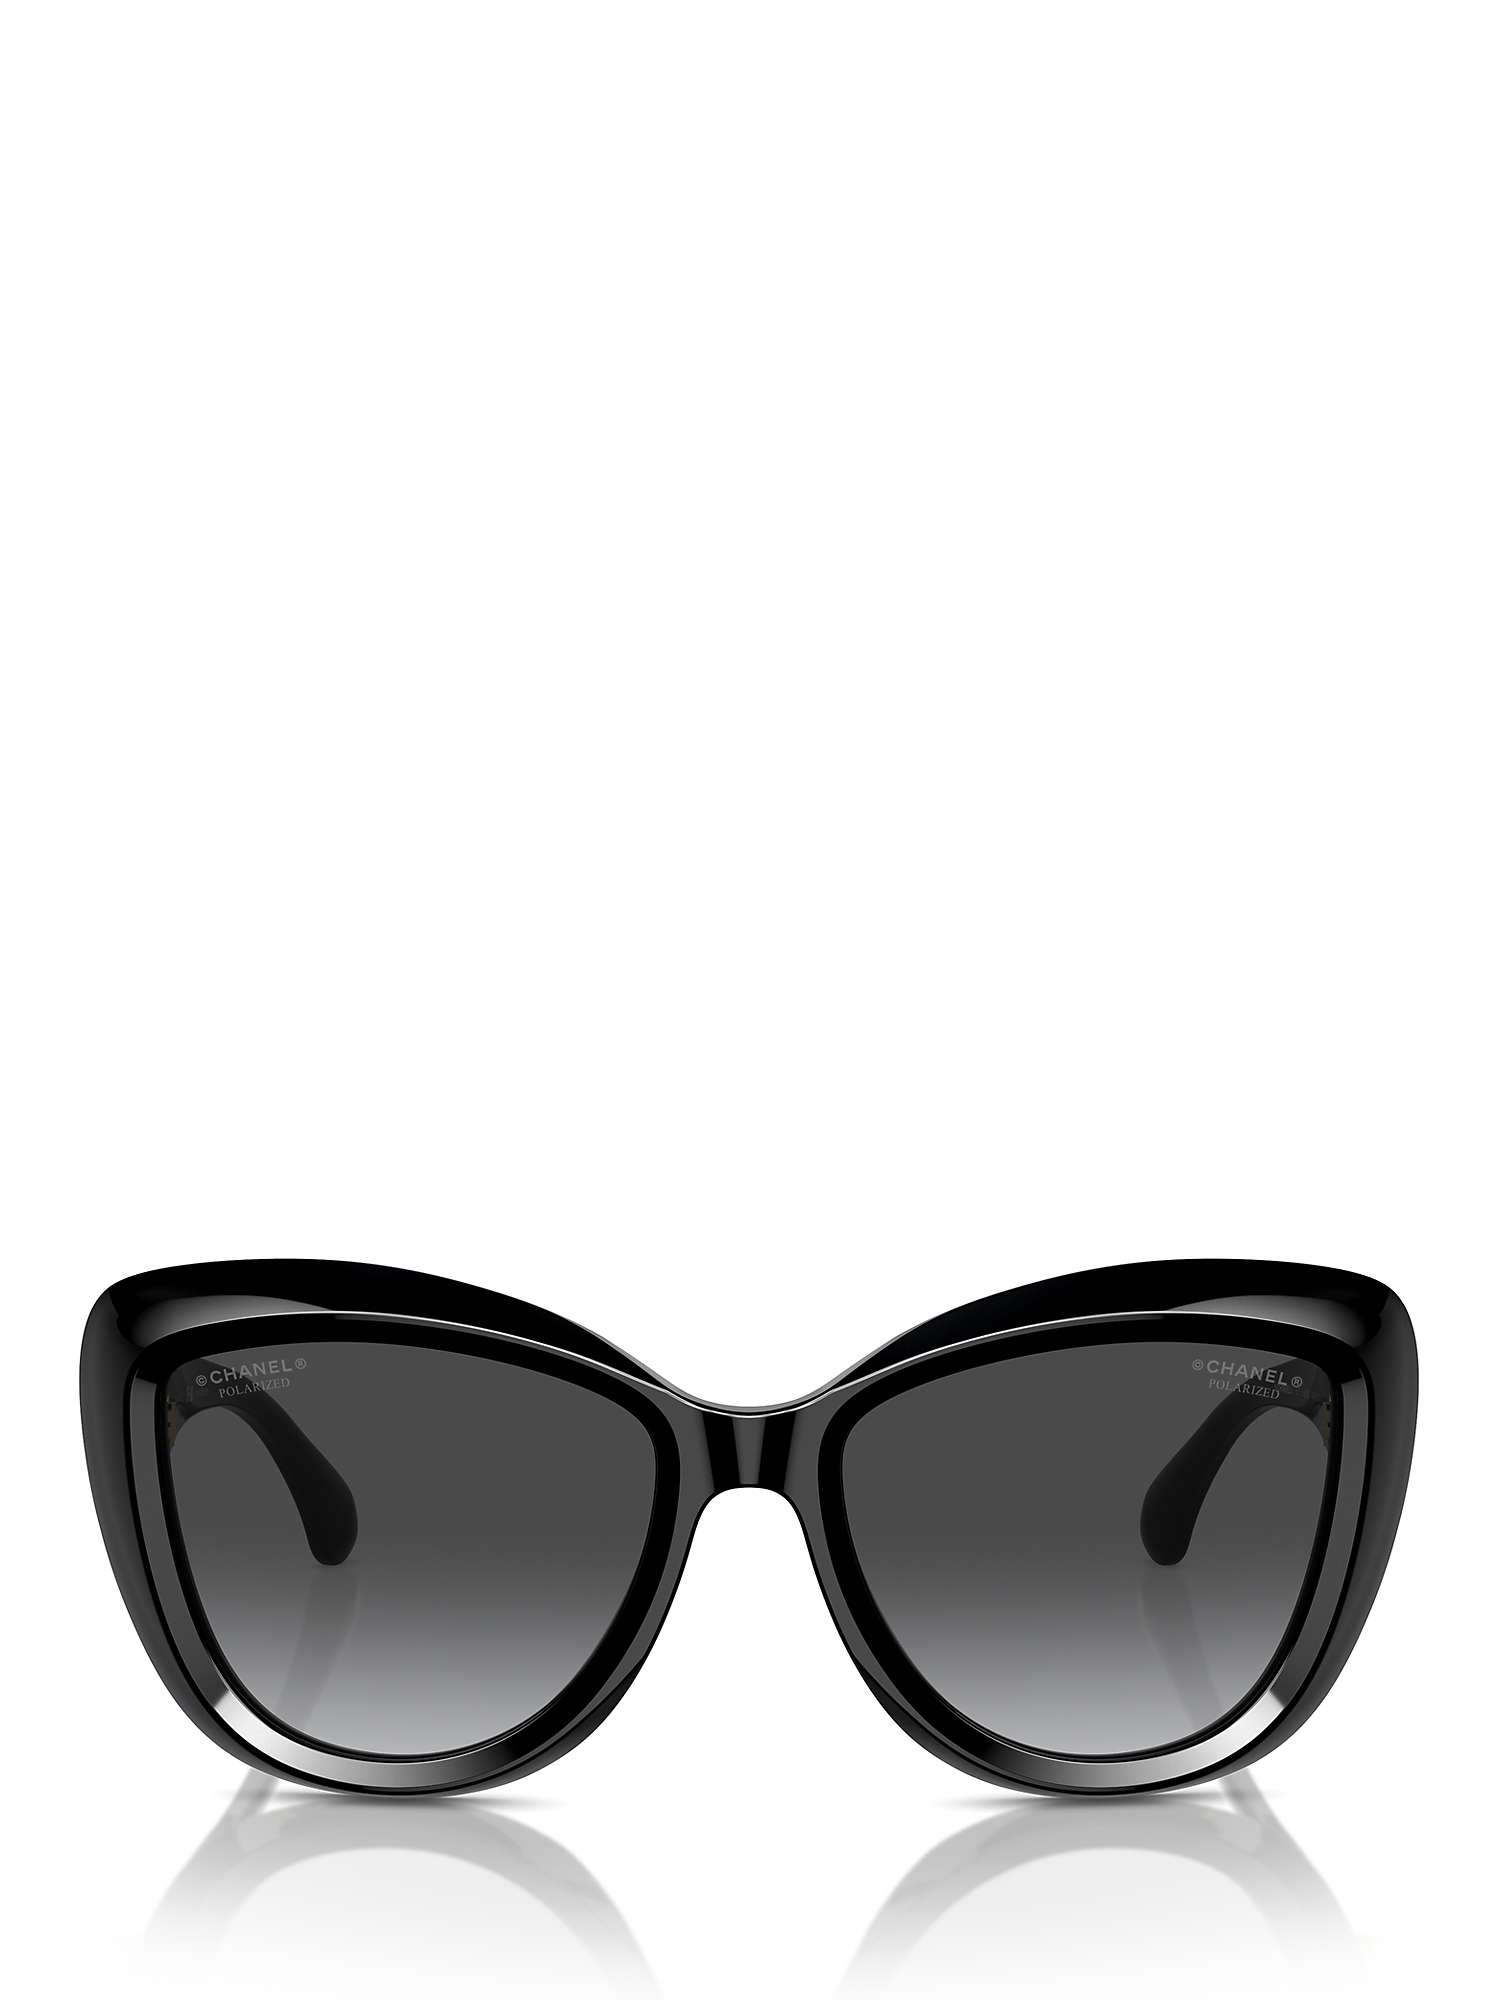 Buy CHANEL Cat Eye Sunglasses CH5517 Black/Grey Gradient Online at johnlewis.com